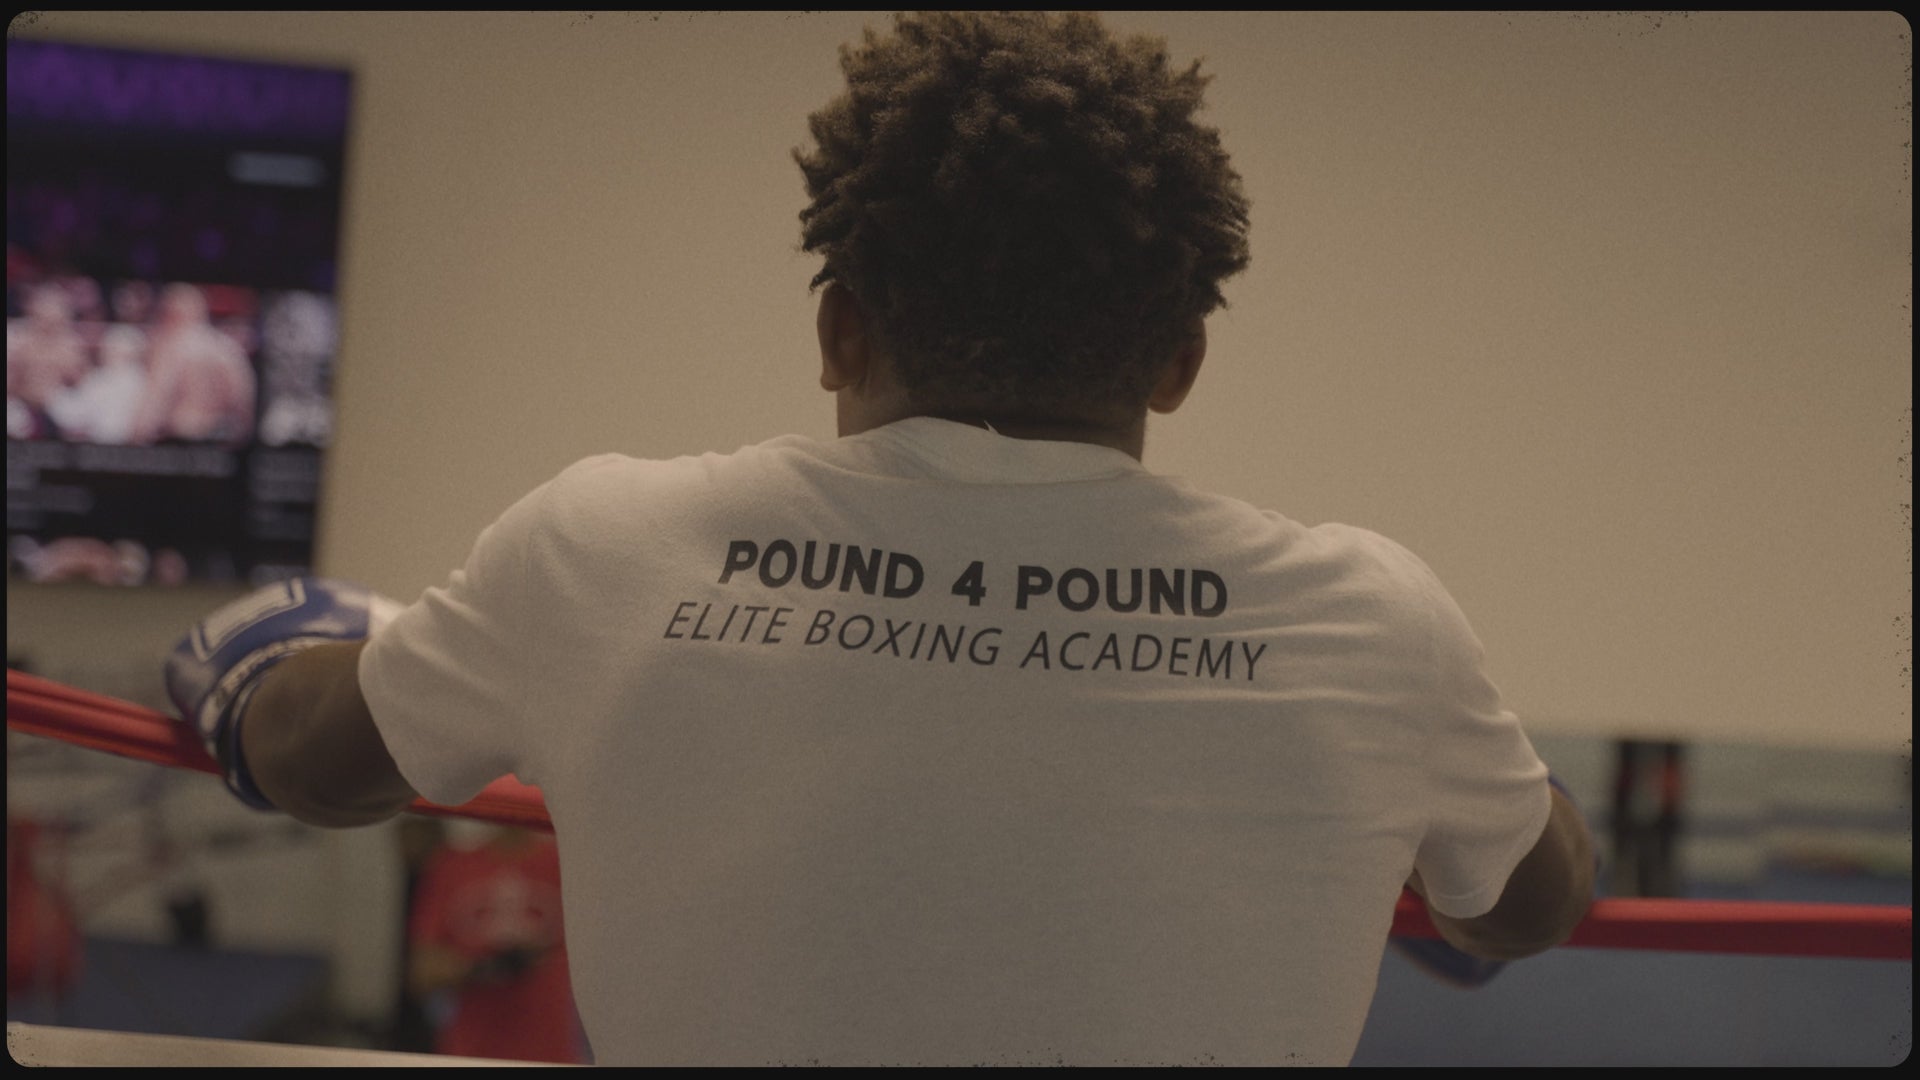 Load video: Pound 4 Pound Elite Boxing Academy